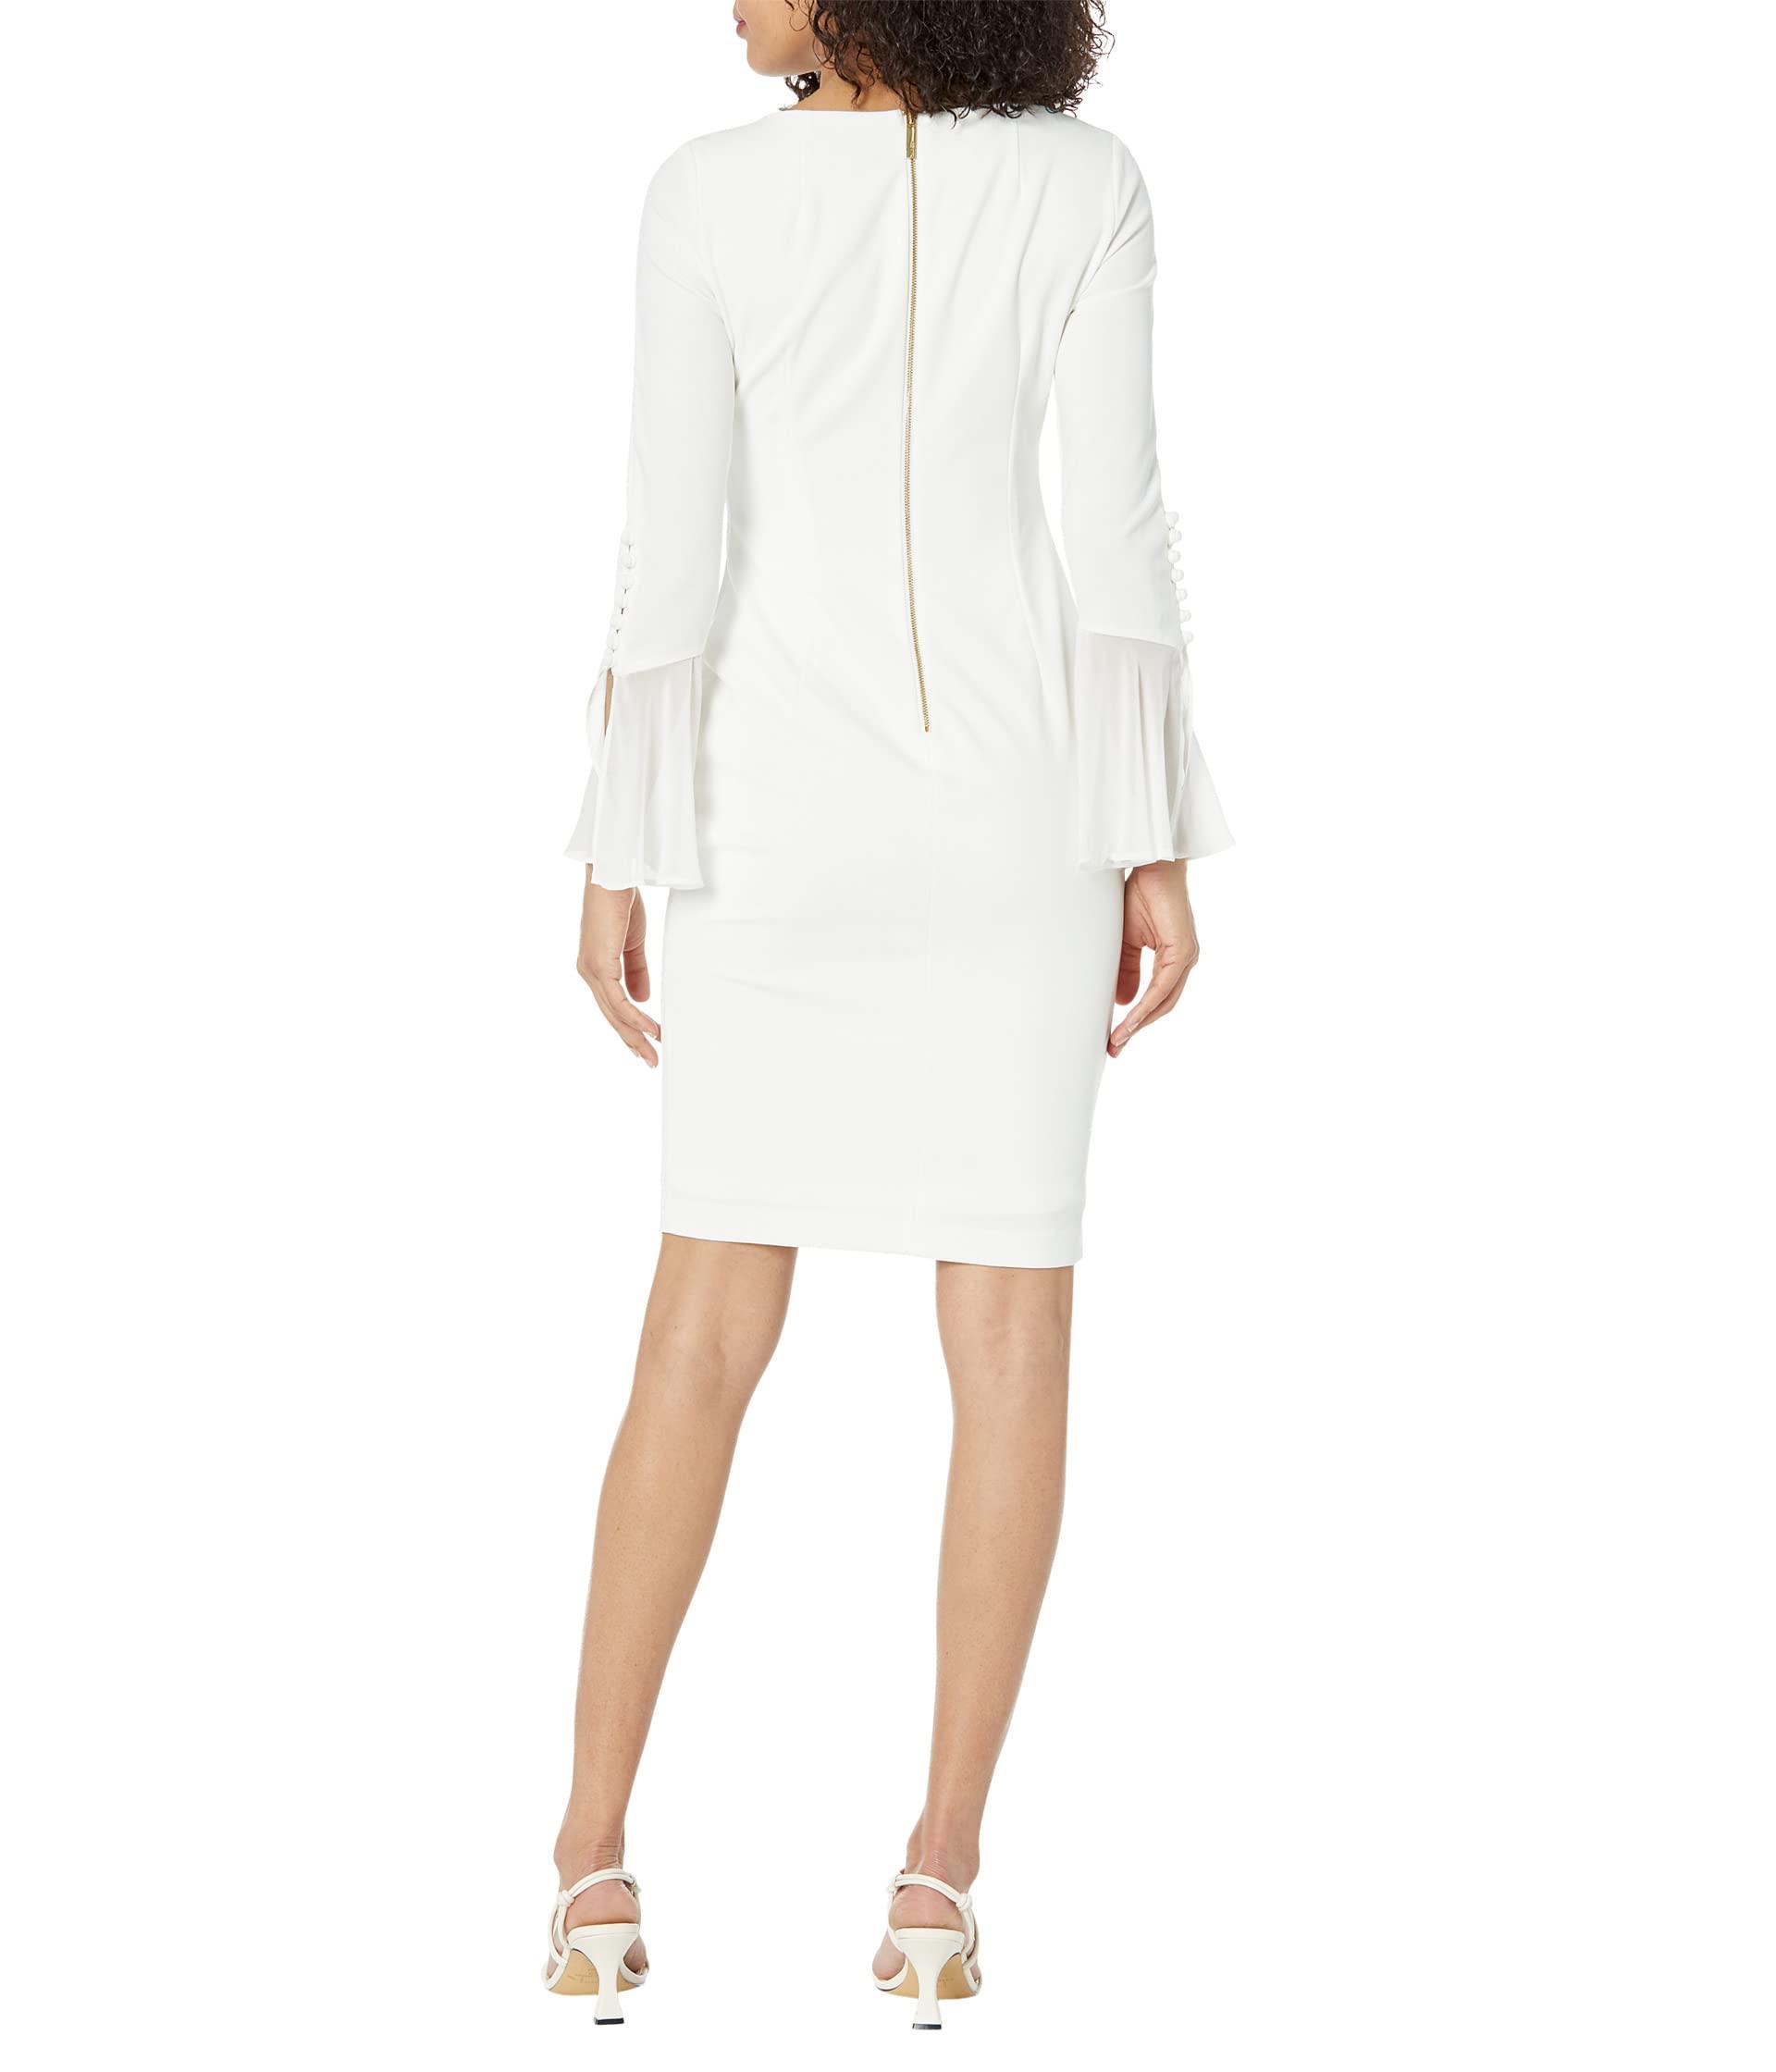 Calvin Klein Chiffon-Bell-Sleeve Sheath Dress - Aubergine - Size 2